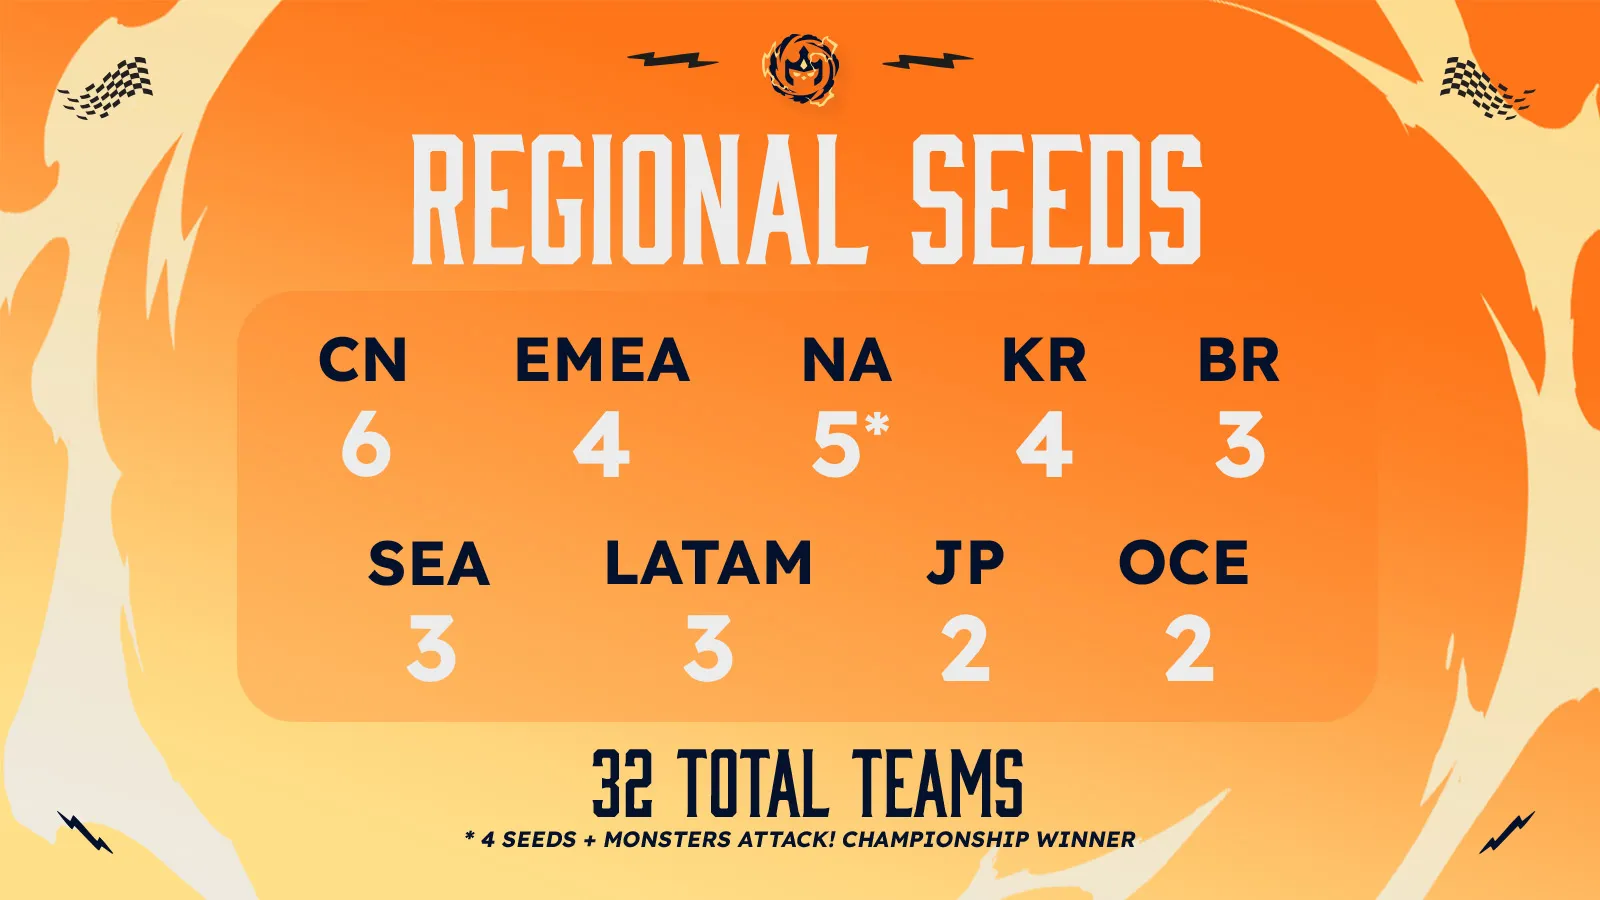 Image of Regional Seeds for TFT Set 9 Worlds